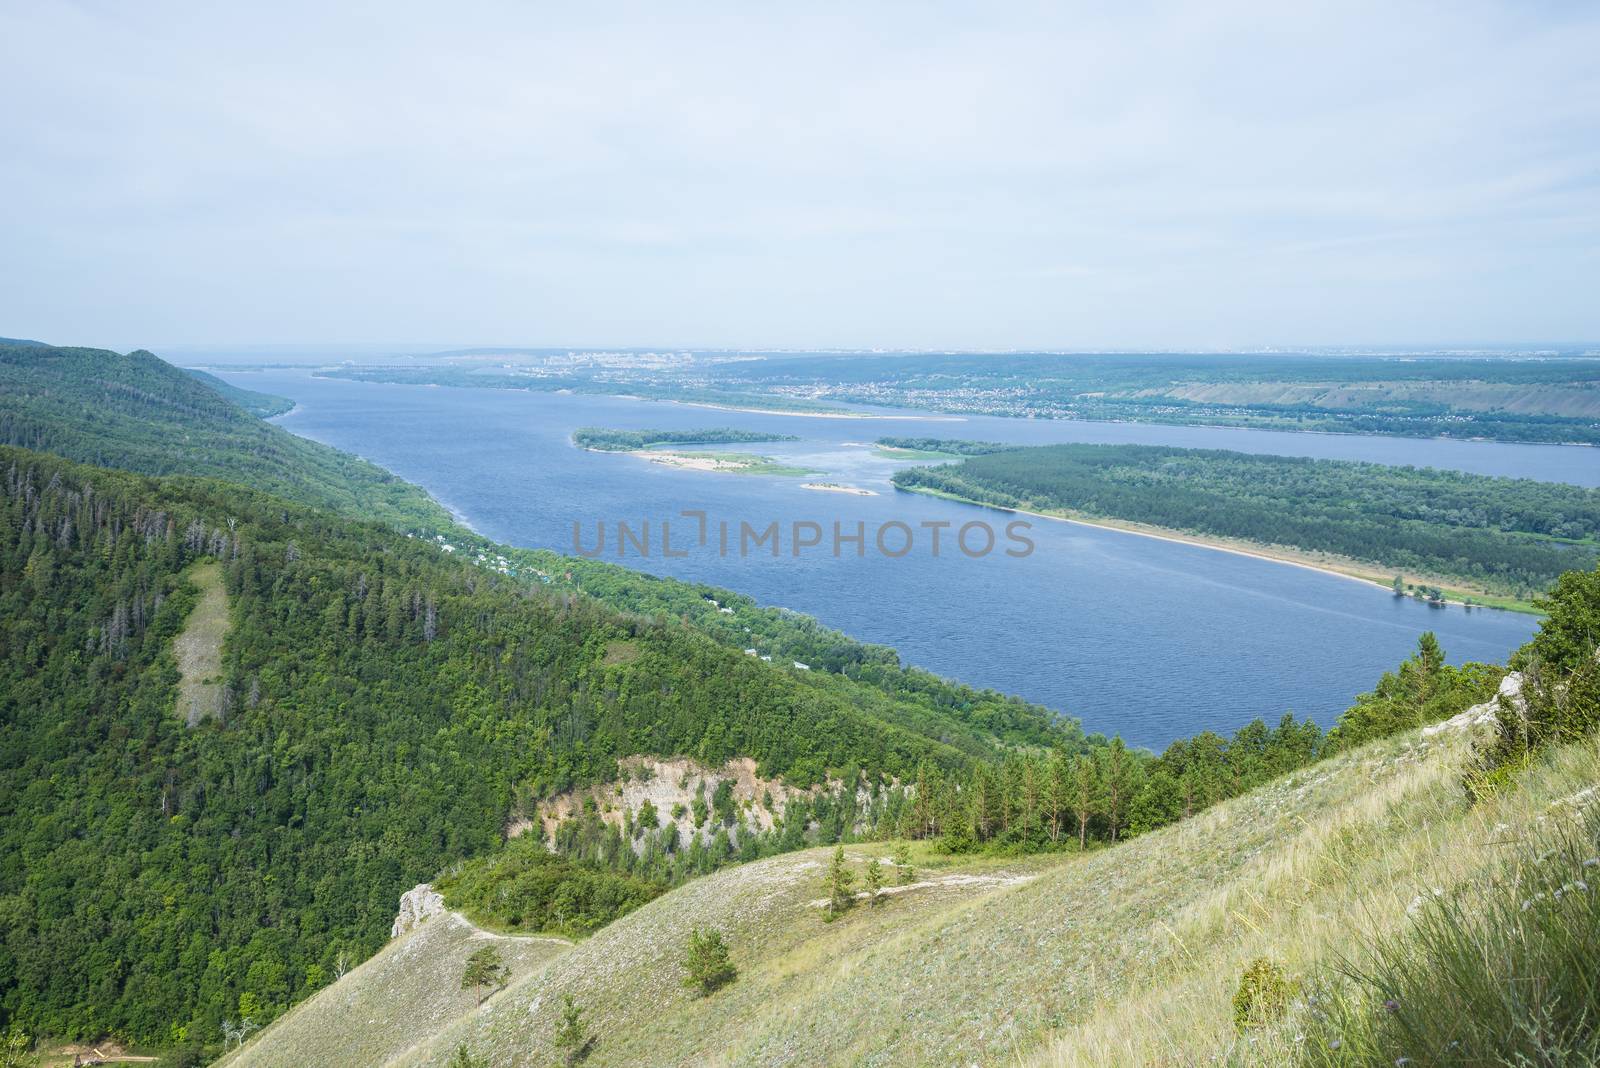 Strelnaya Mountain. Attraction of the Samara region. On a Sunny summer day